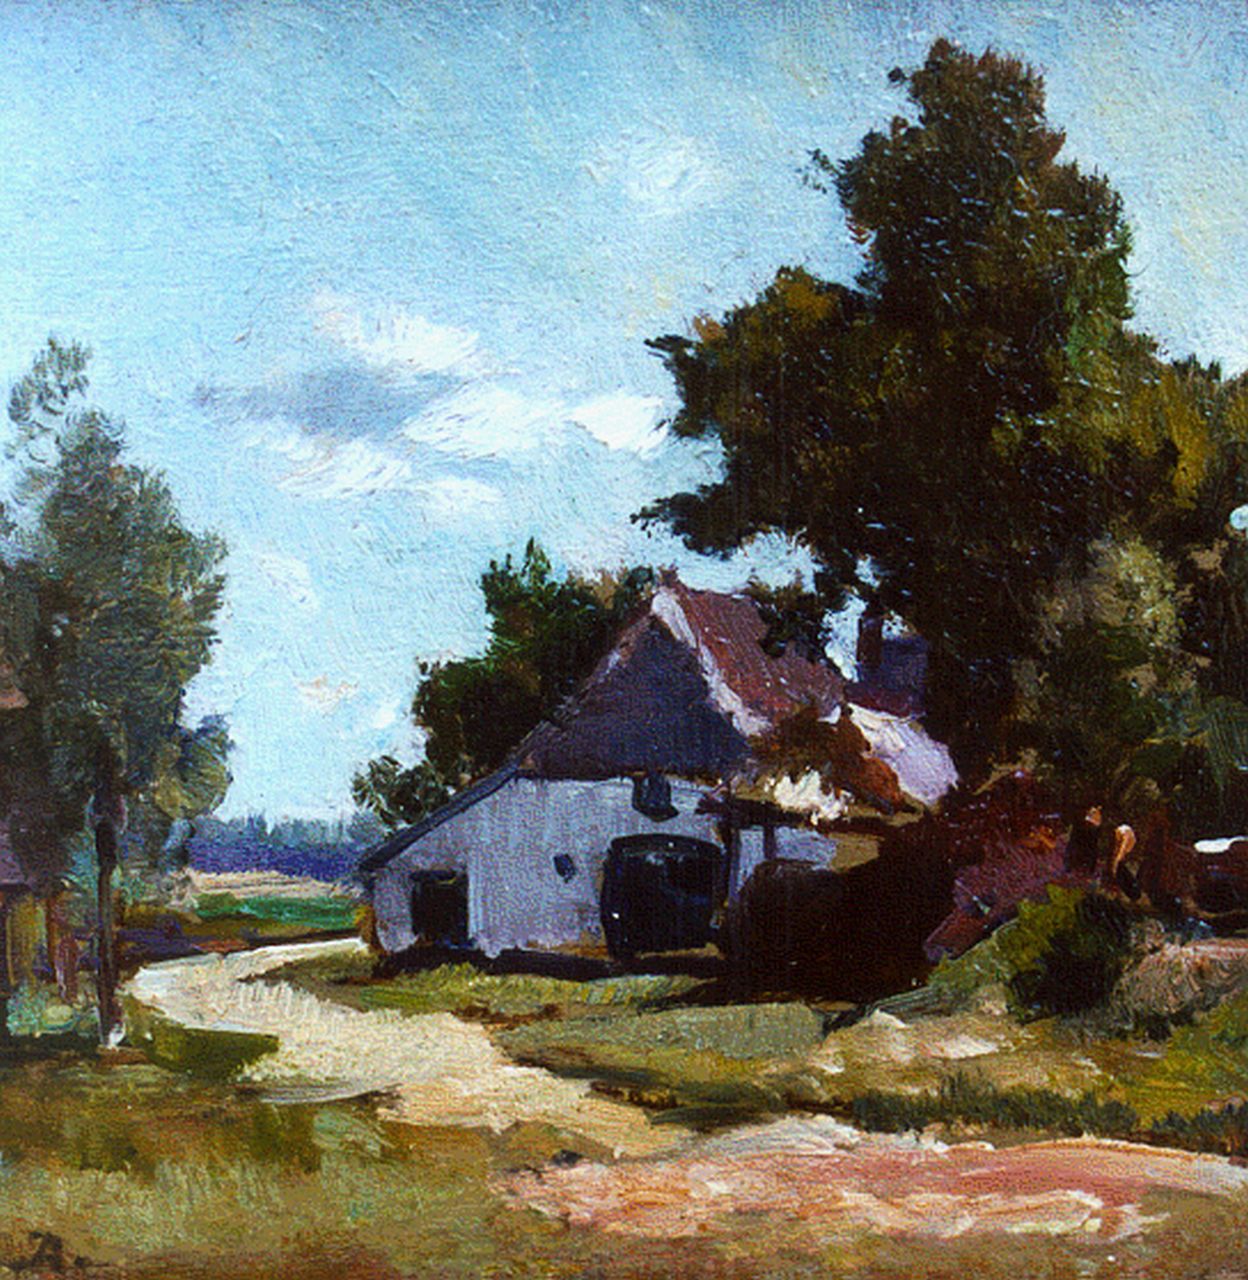 Akkeringa J.E.H.  | 'Johannes Evert' Hendrik Akkeringa, A farm in a summer landscape, oil on panel 12.1 x 12.3 cm, signed l.l. with monogram